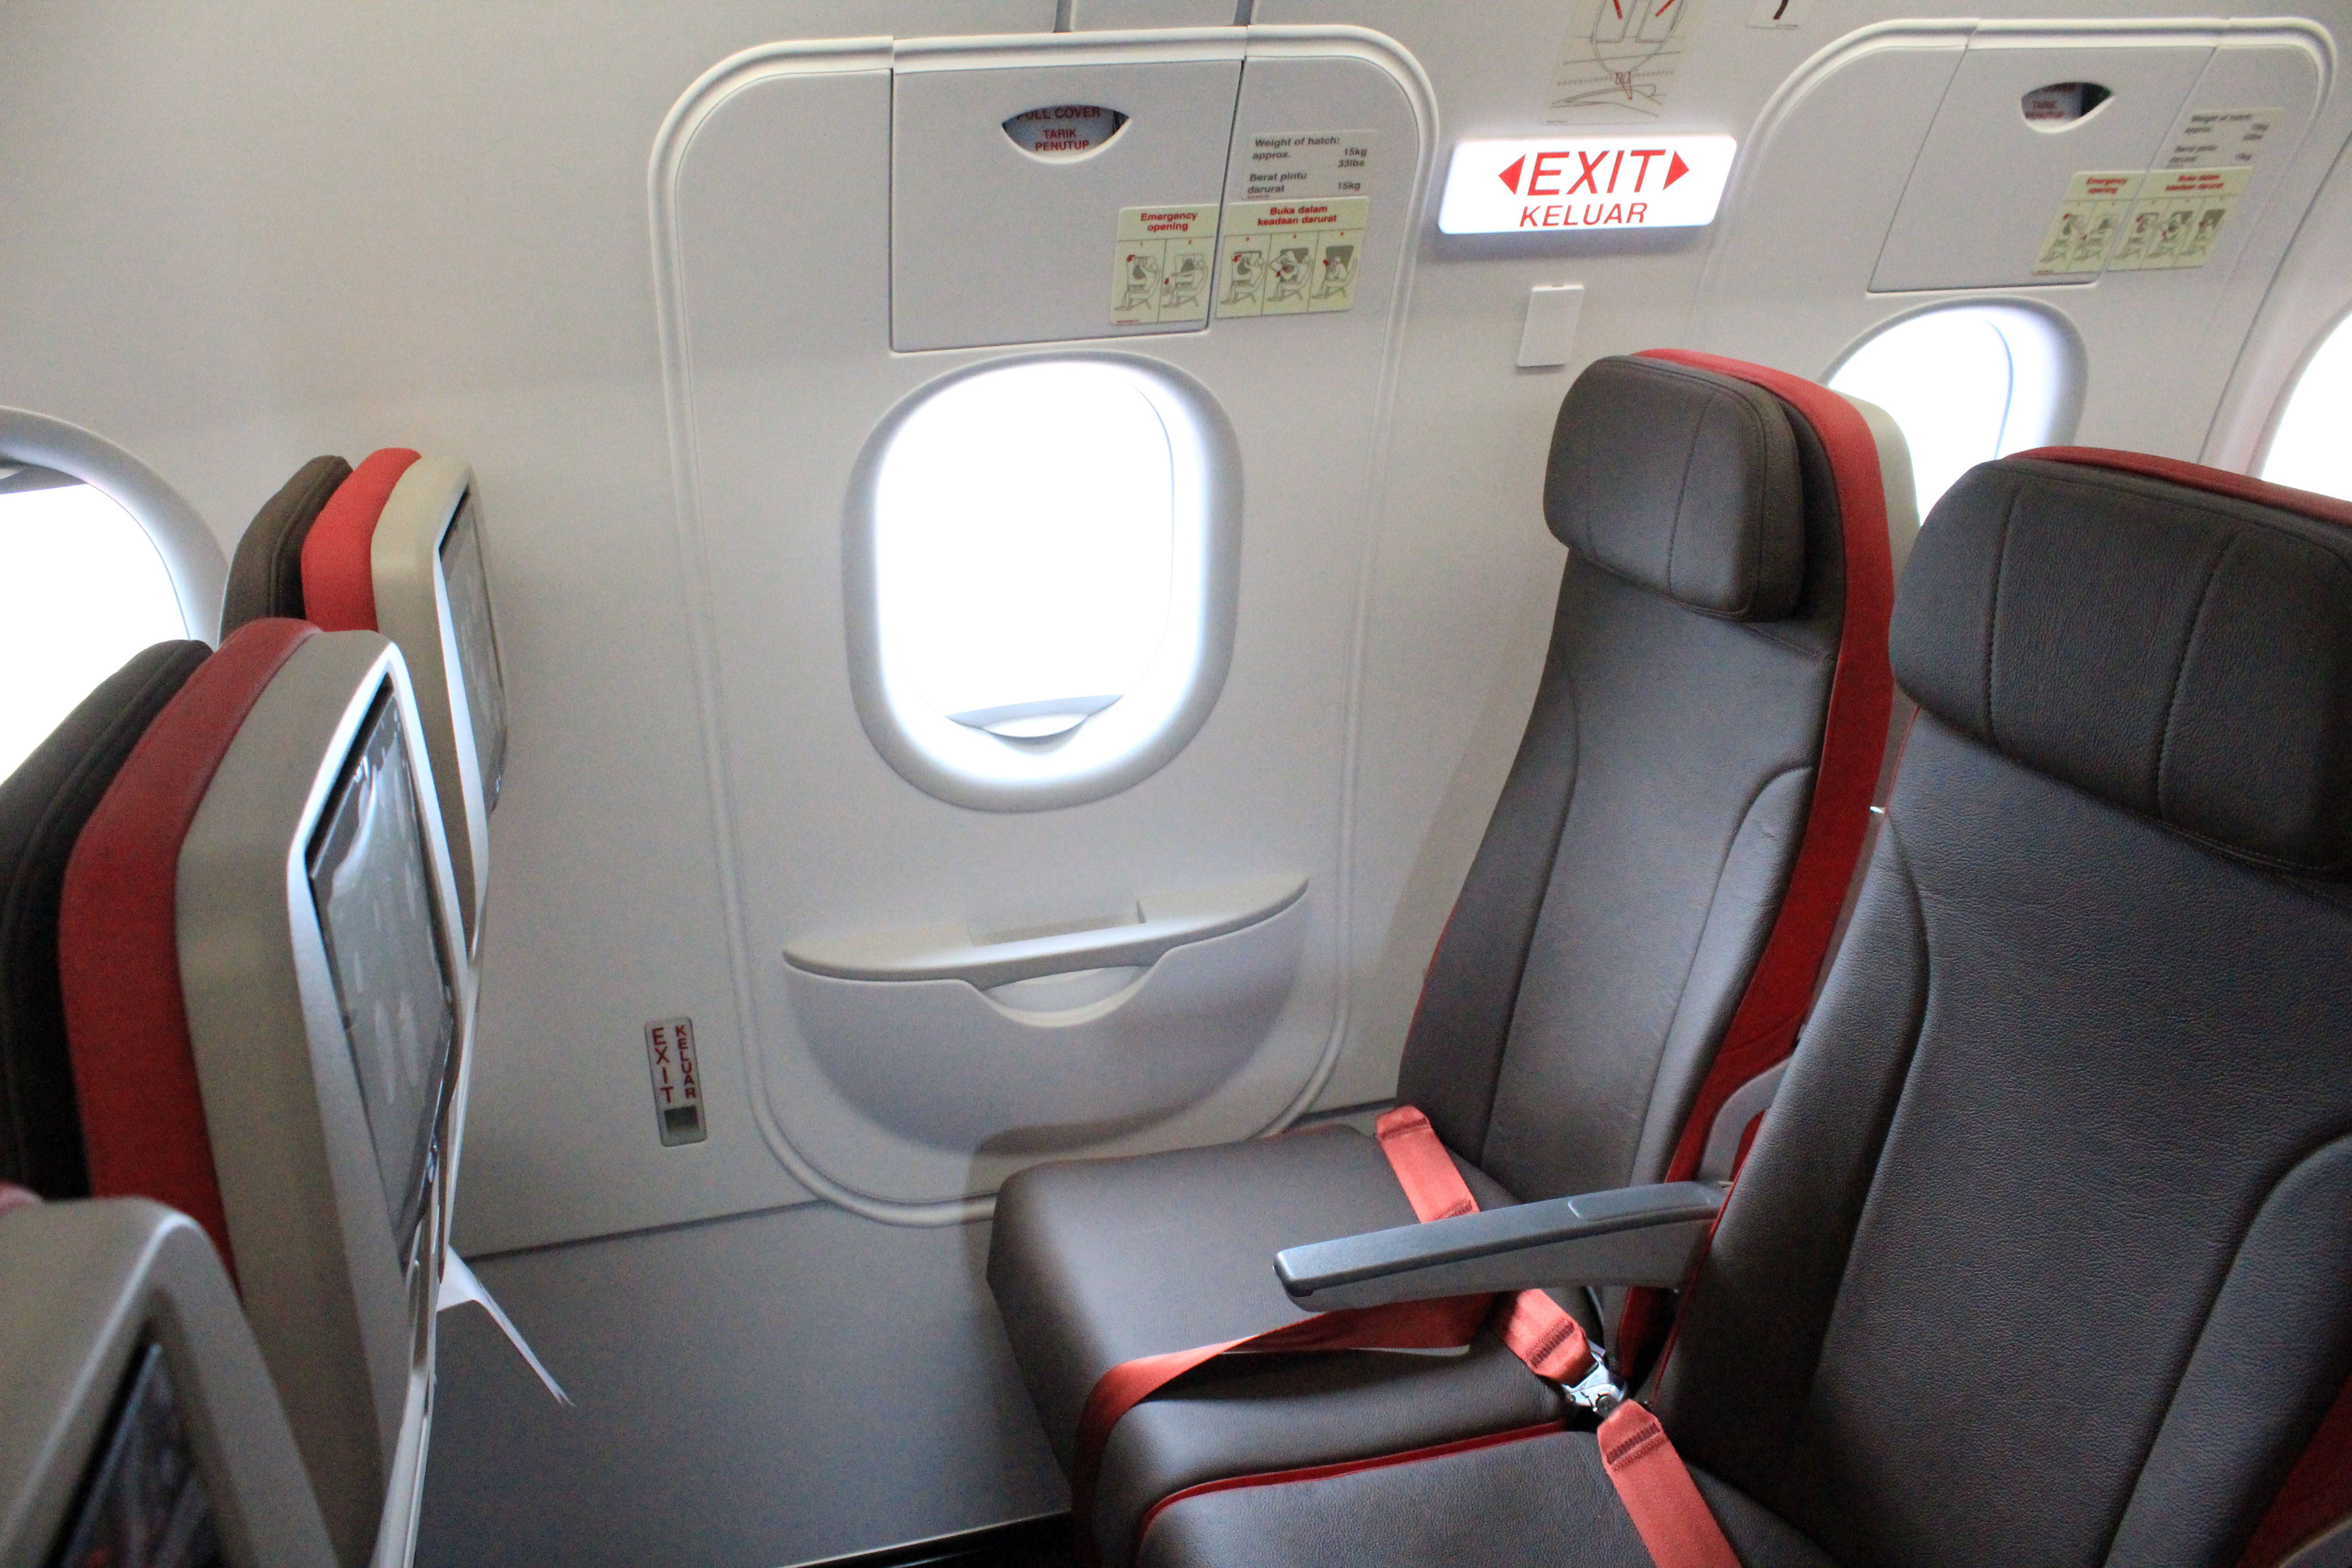 Exit row seats on Batik Air